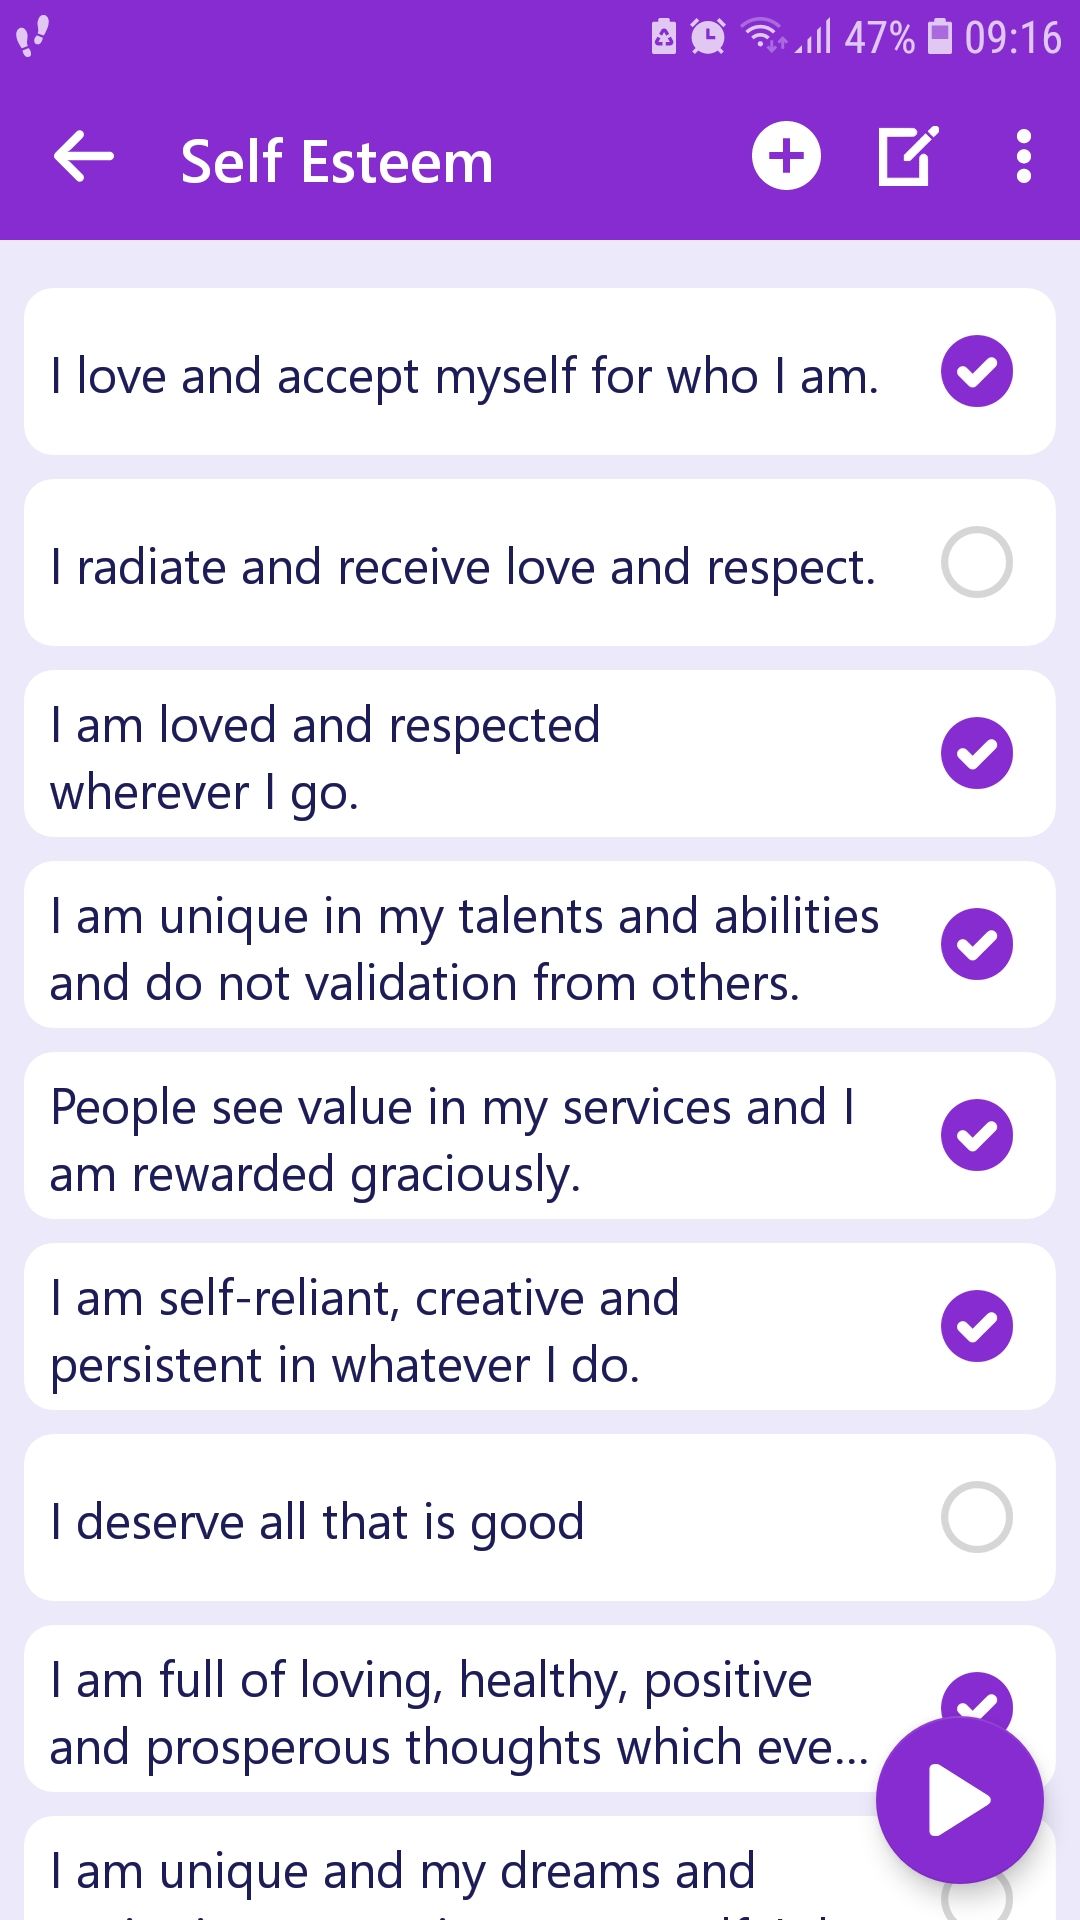 Daily Affirmation mobile positivity app self esteem